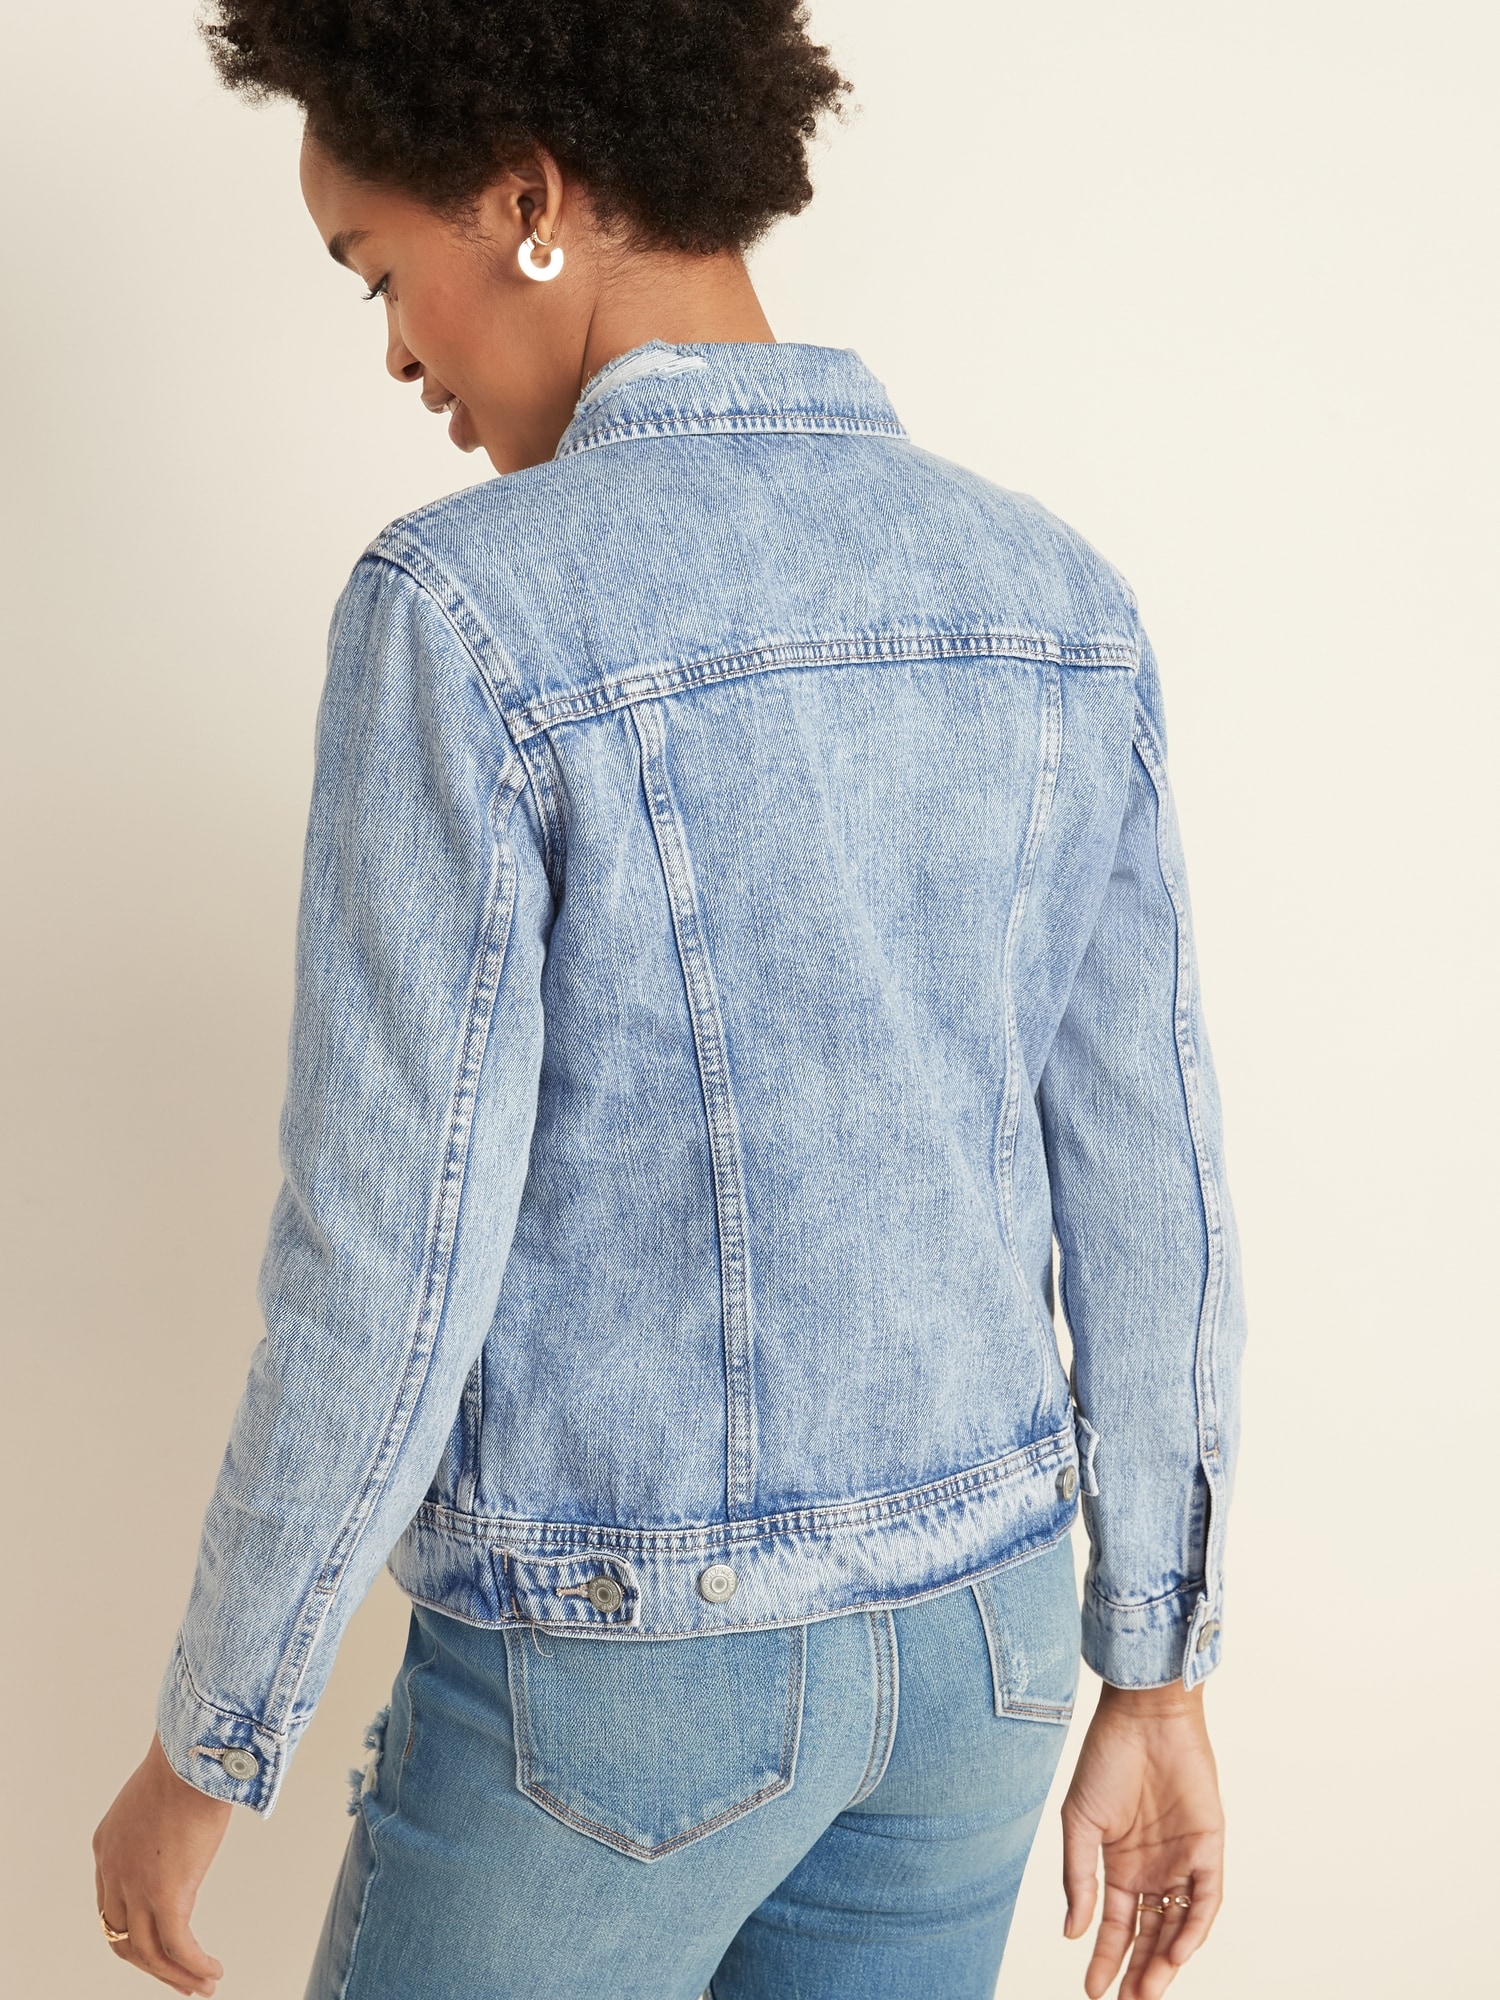 long blue jean distressed jacket